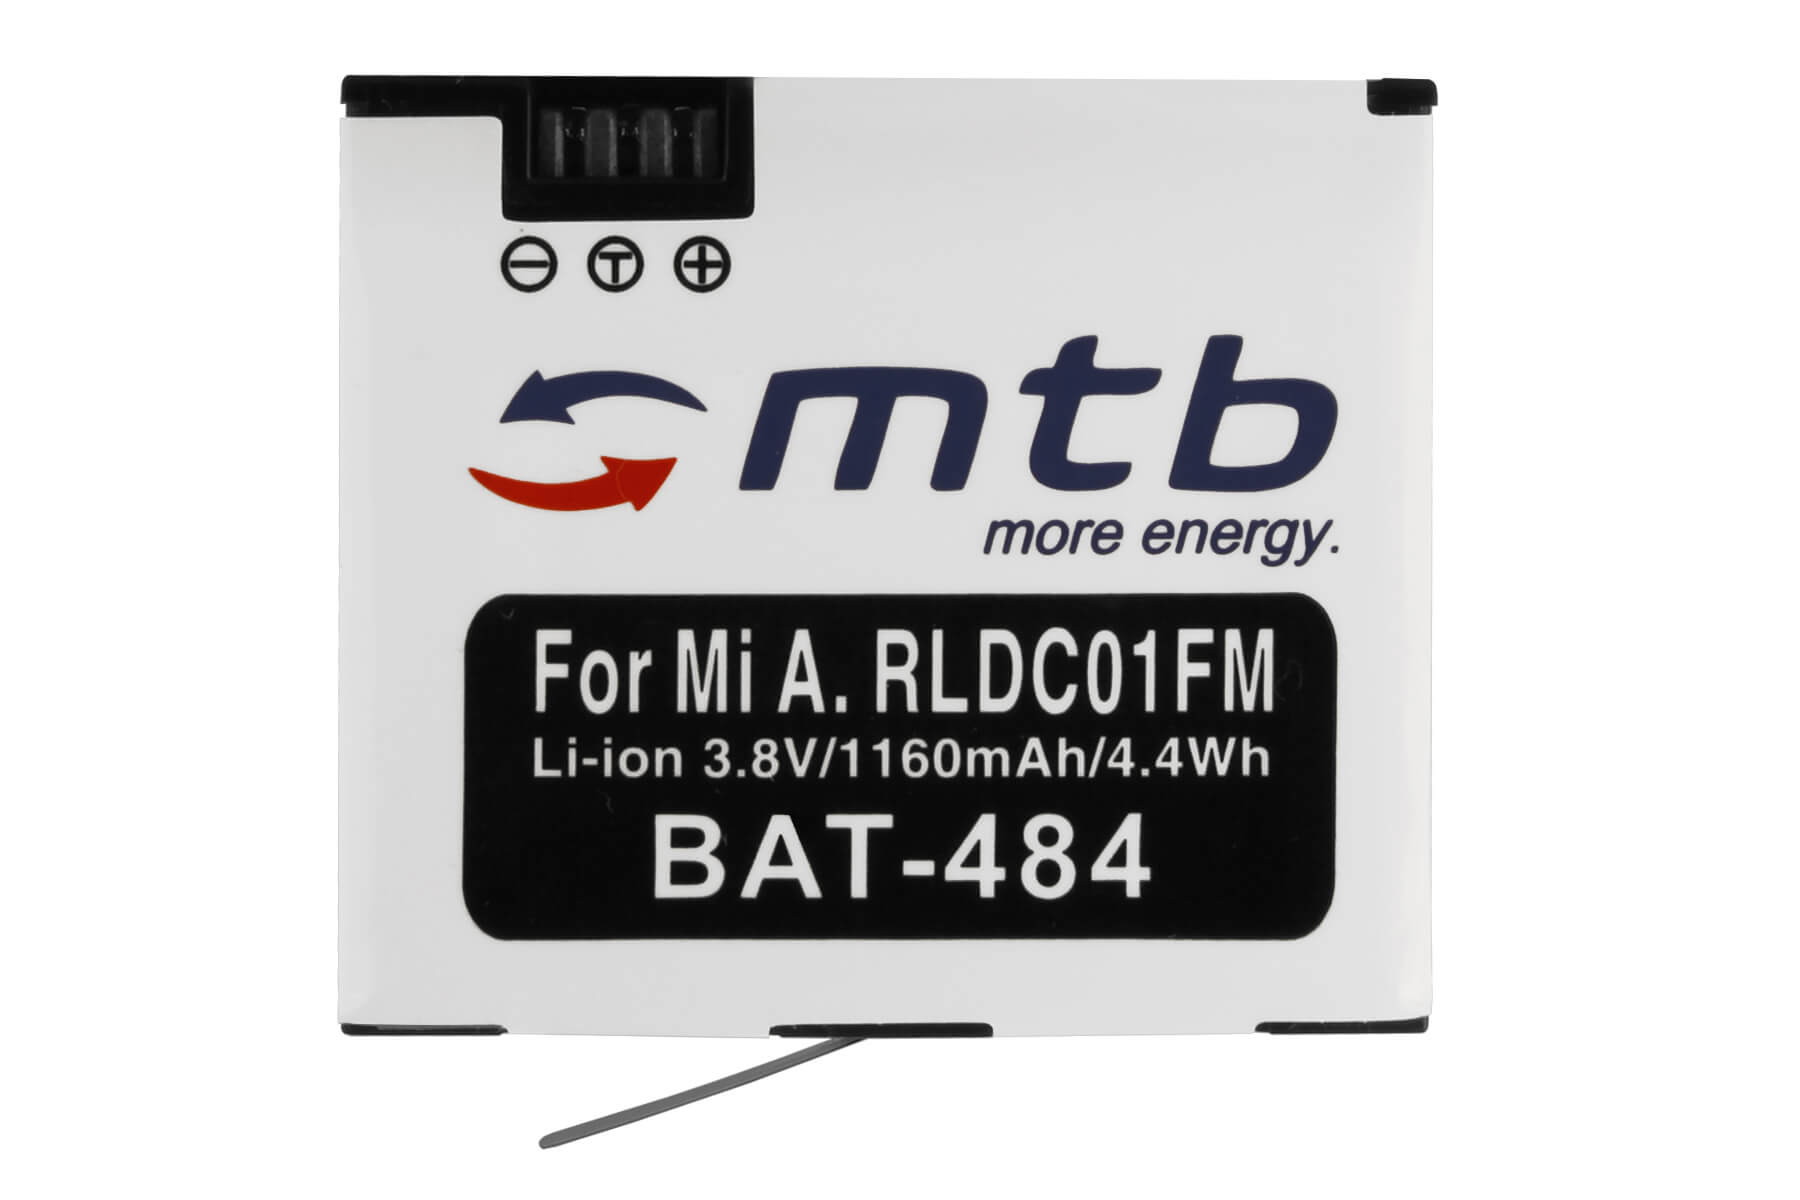 mAh BAT-484 1160 RLDC01FM 2x ENERGY MTB MORE Akku, Li-Ion,